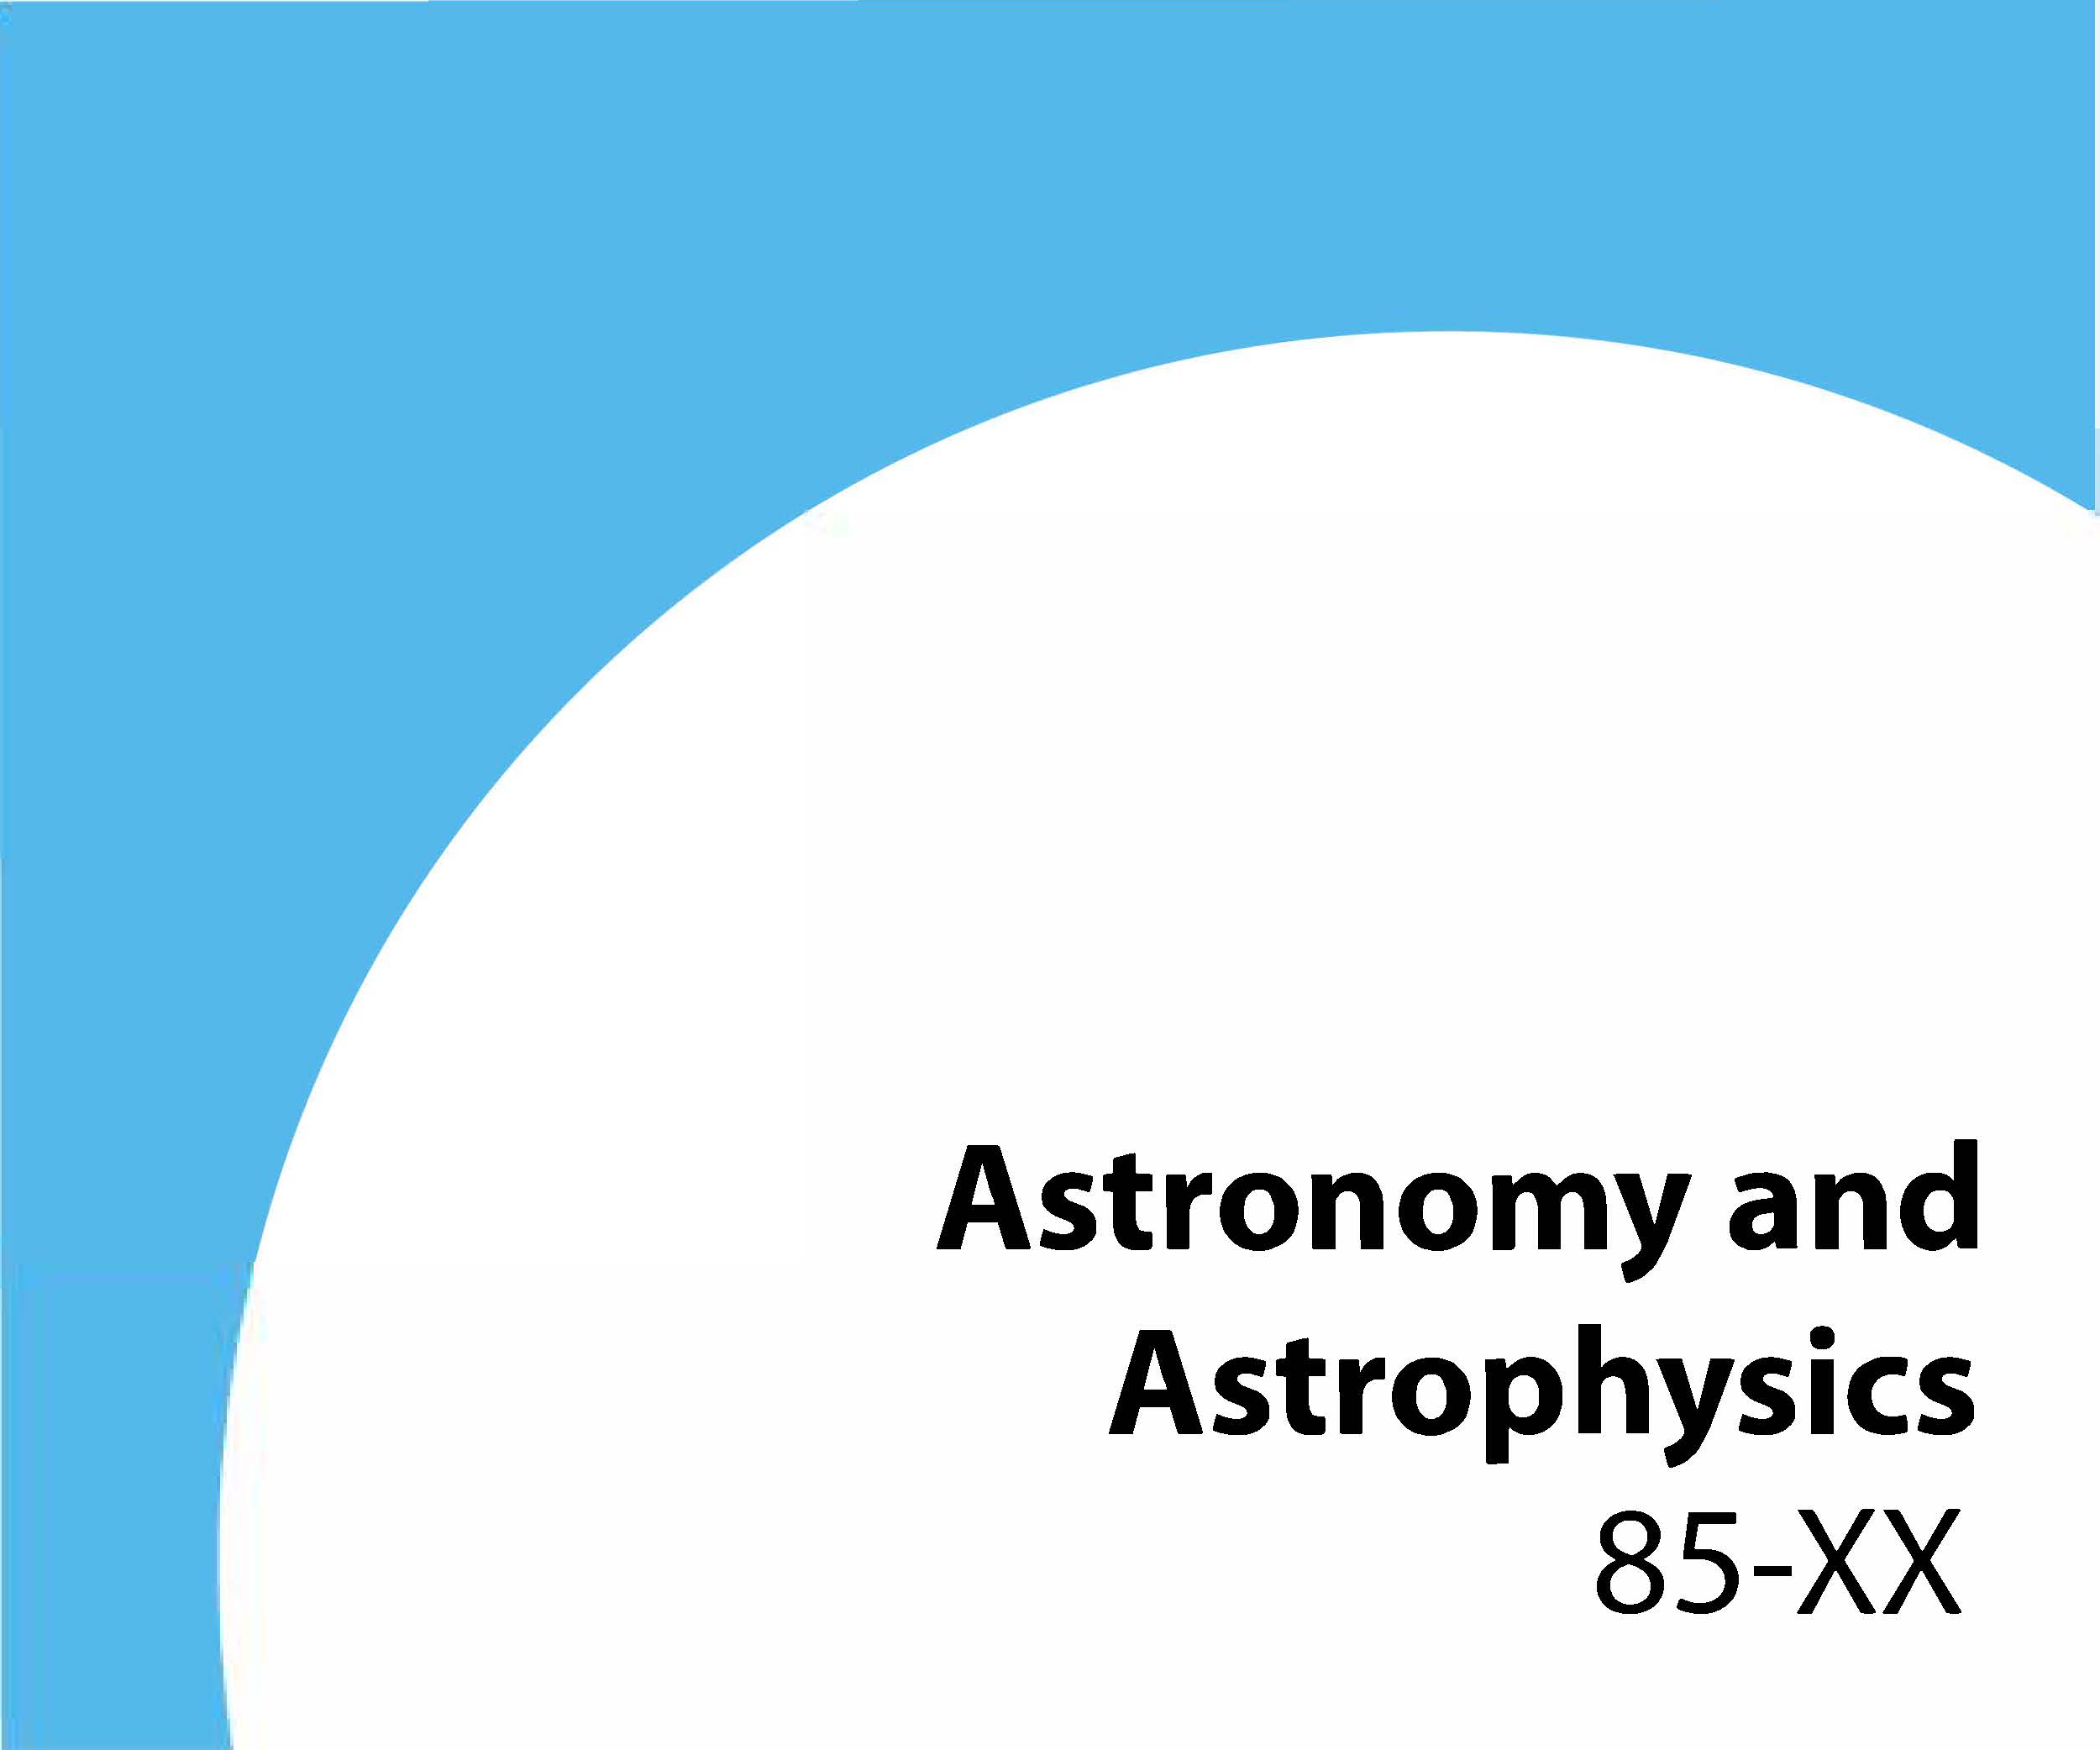 85-xx Astronomy and astrophysics